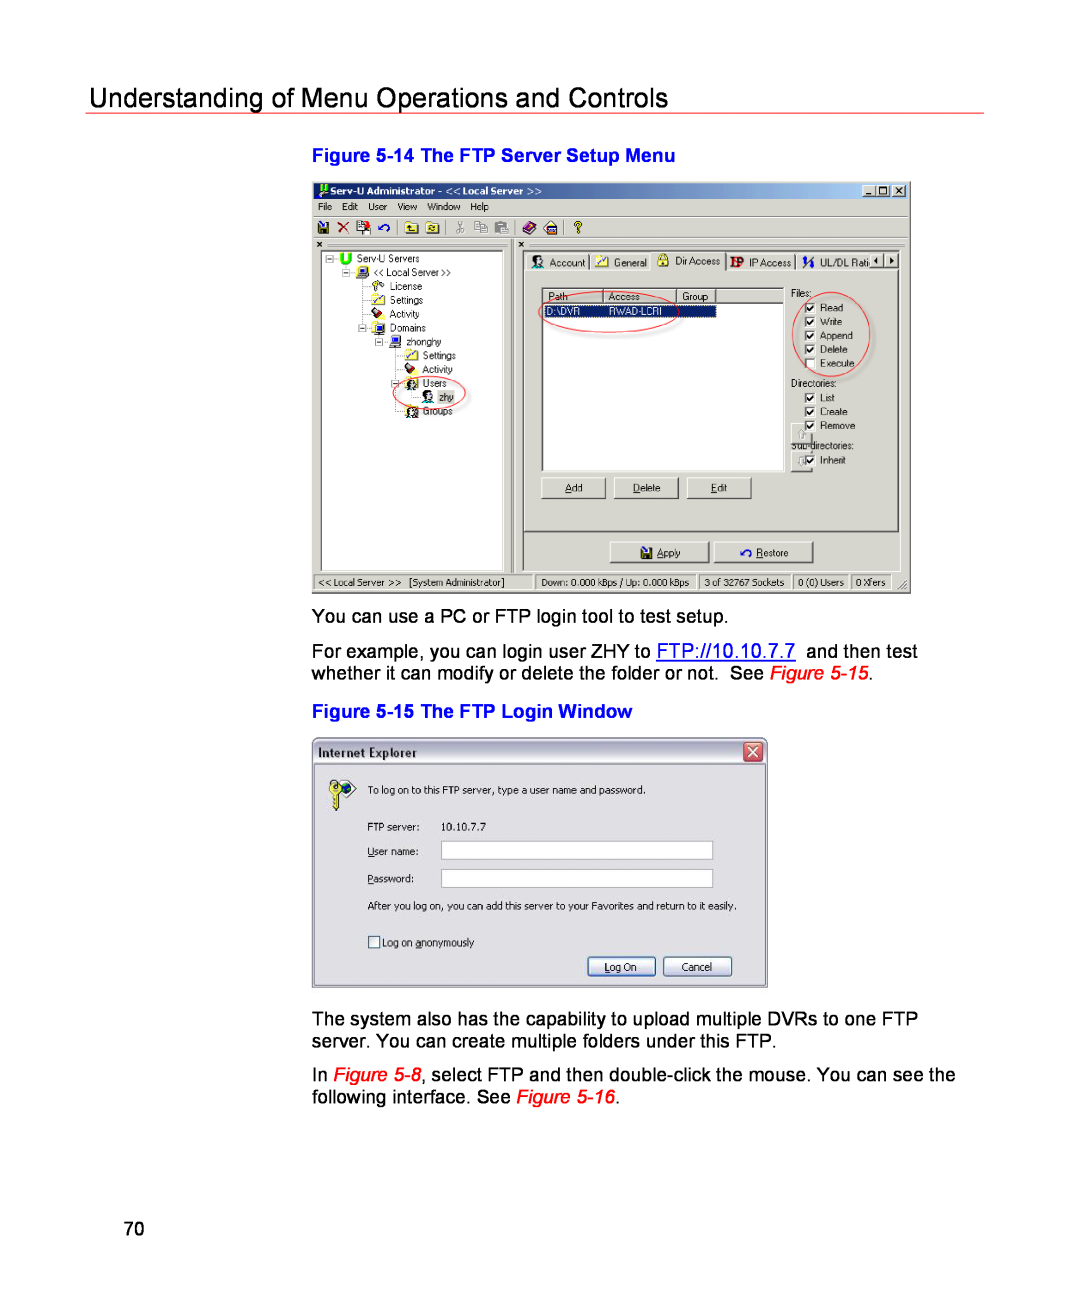 Honeywell HSVR-04 Understanding of Menu Operations and Controls, 14 The FTP Server Setup Menu, 15 The FTP Login Window 